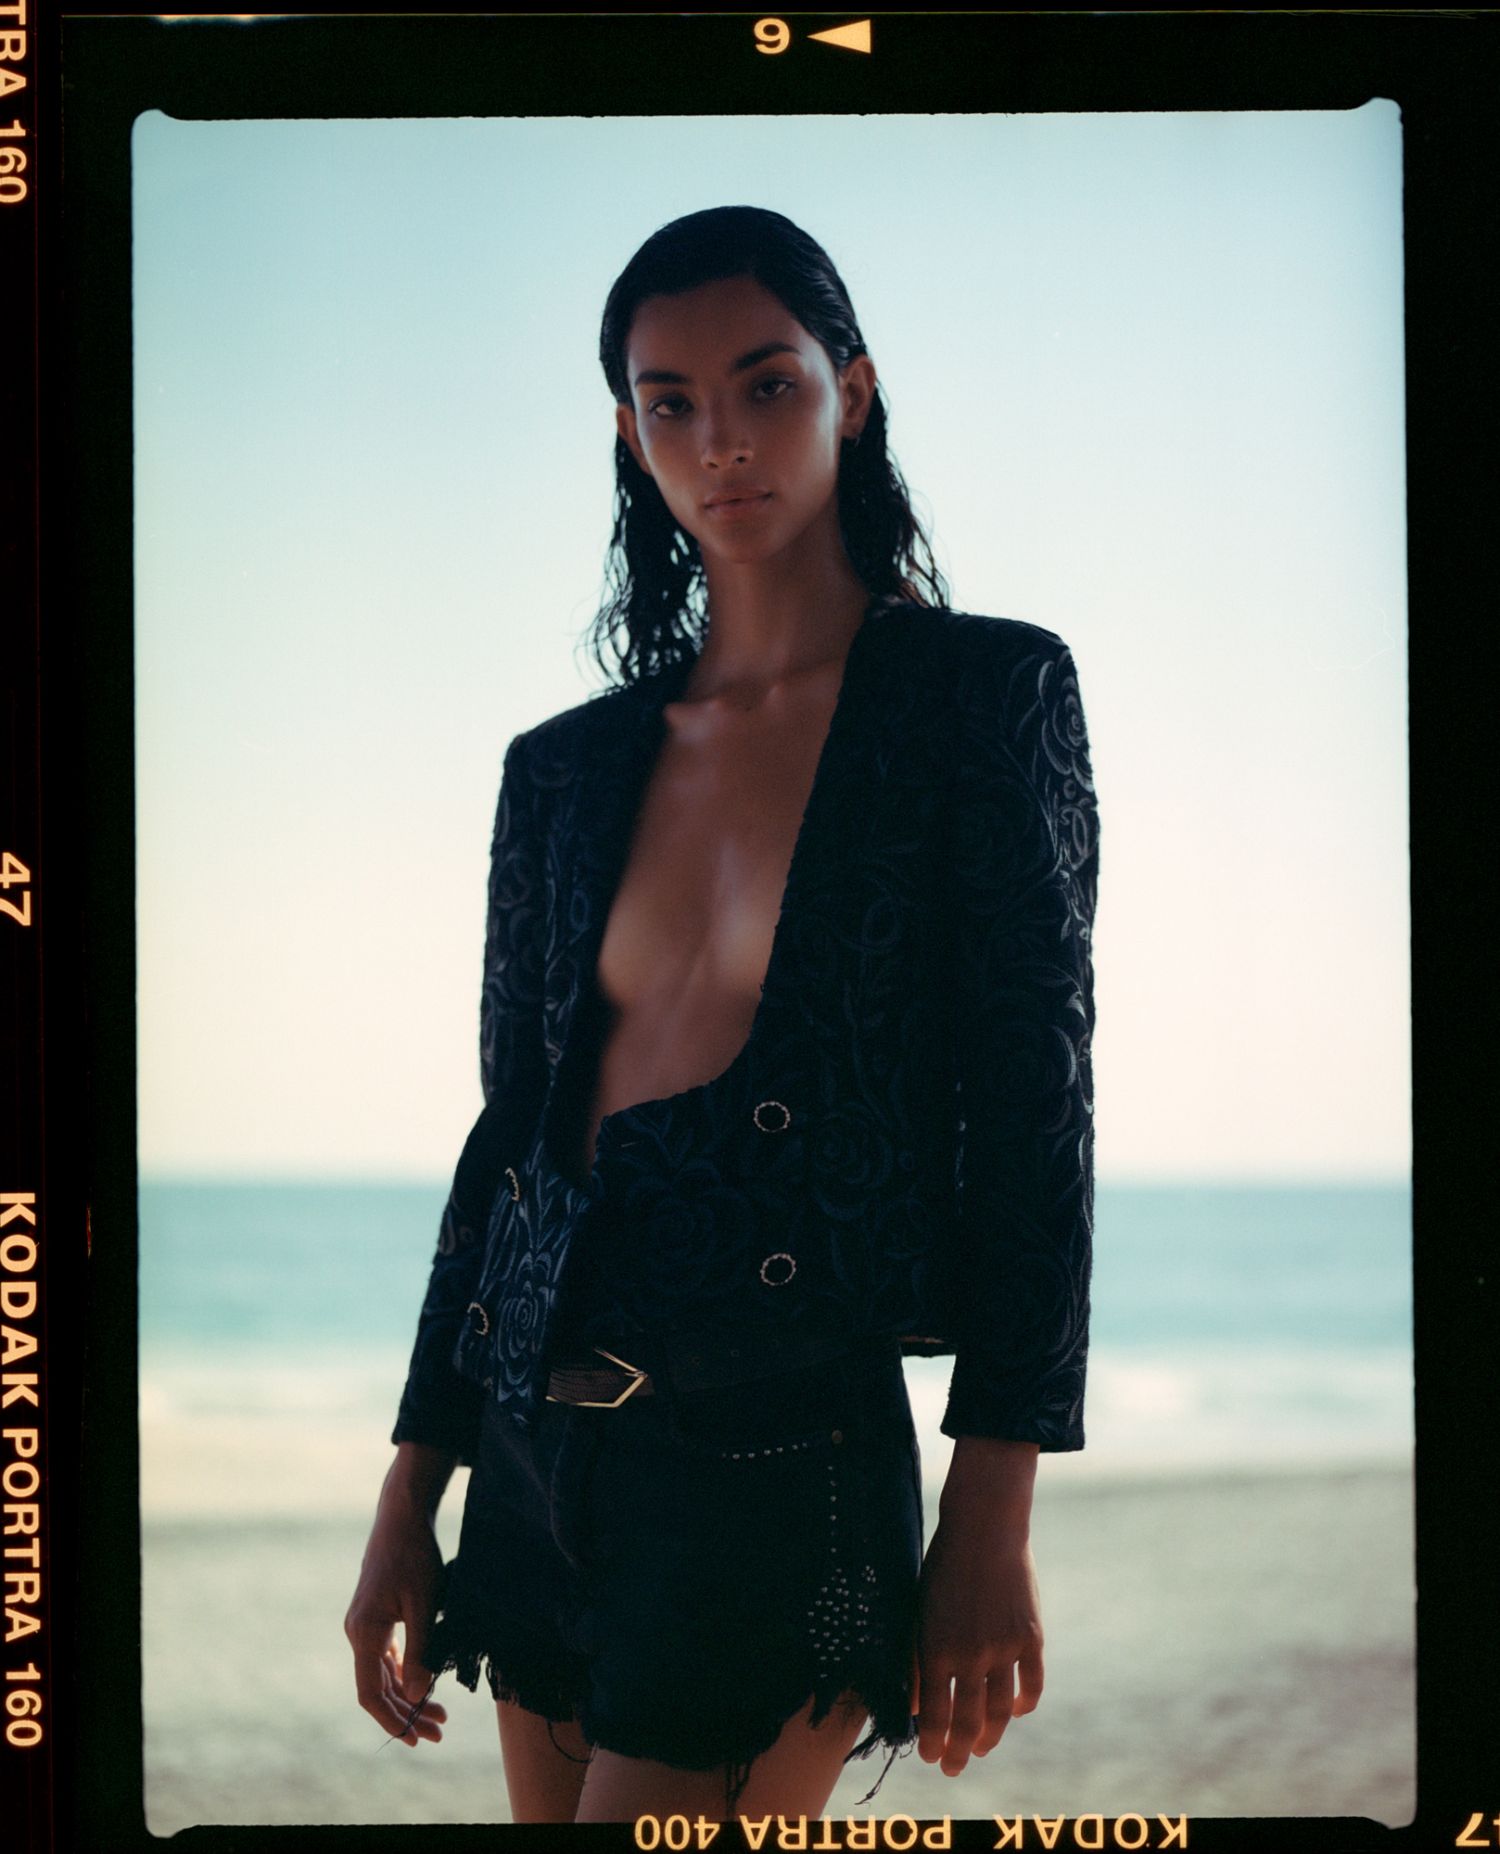 Tindi Mar by Sonia Szostak for Vogue Mexico November 2021 